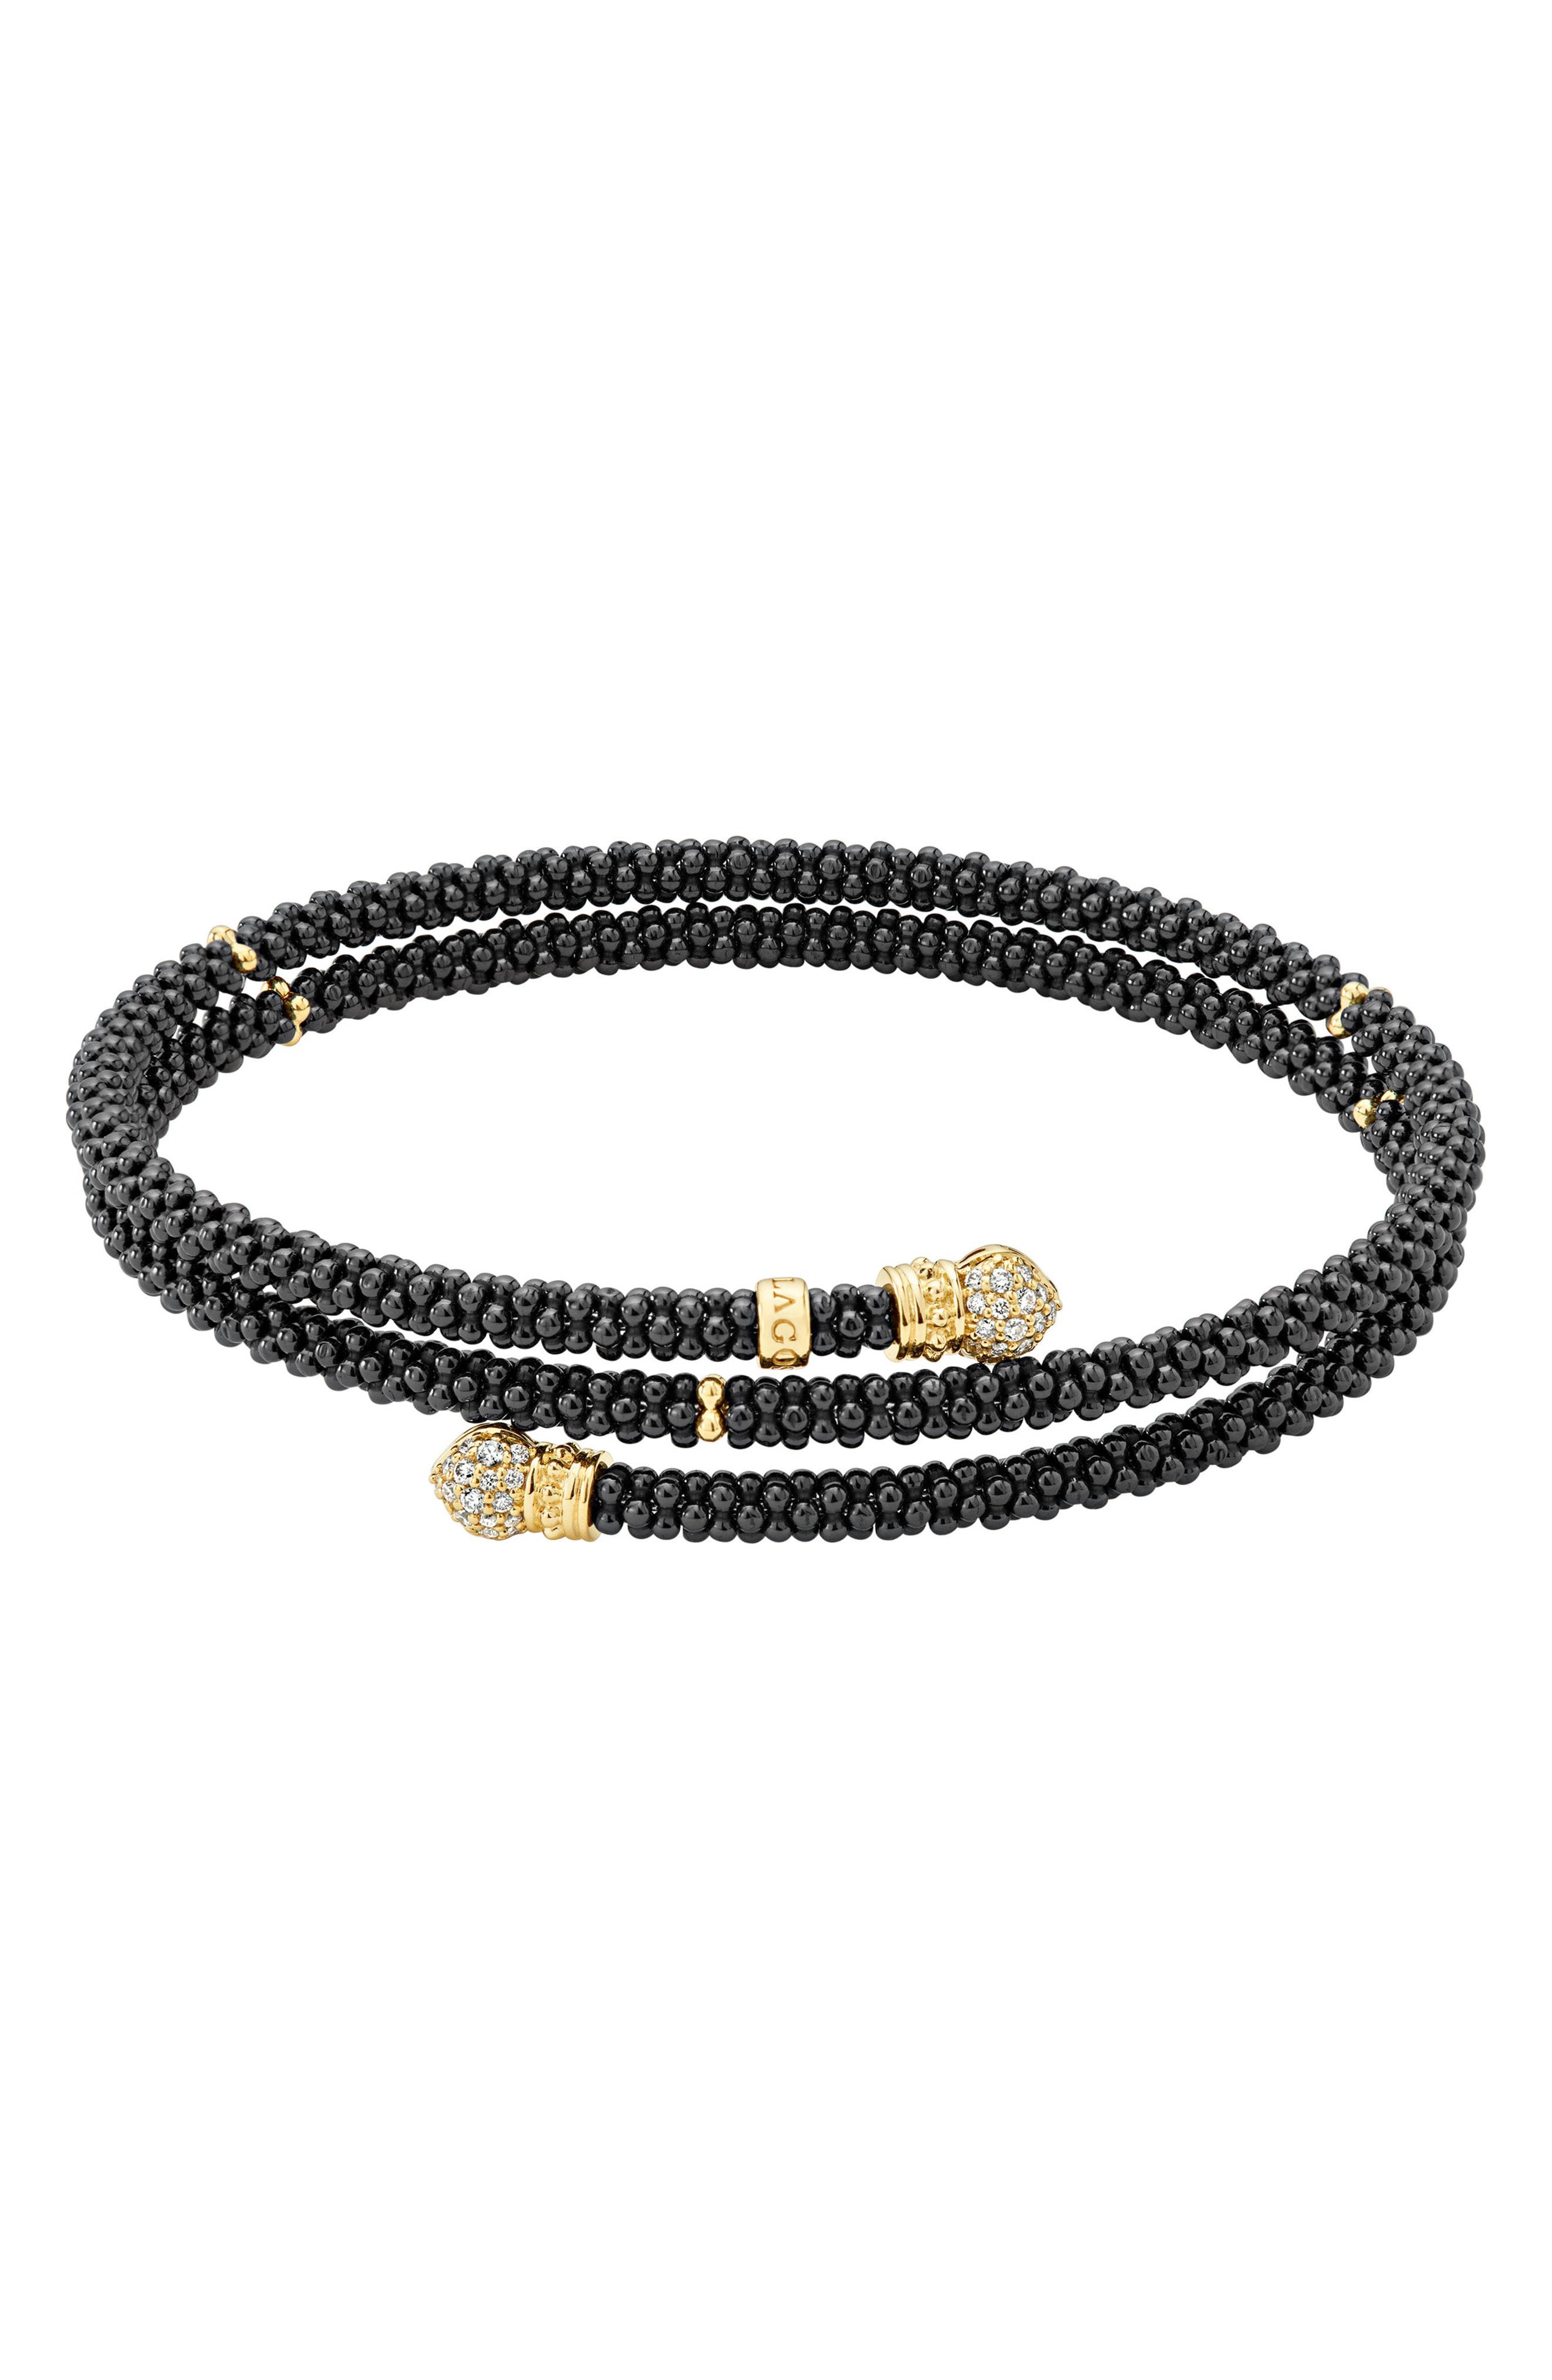 Lyst - Lagos Gold & Black Caviar Pave Diamond Wrap Bracelet in Black